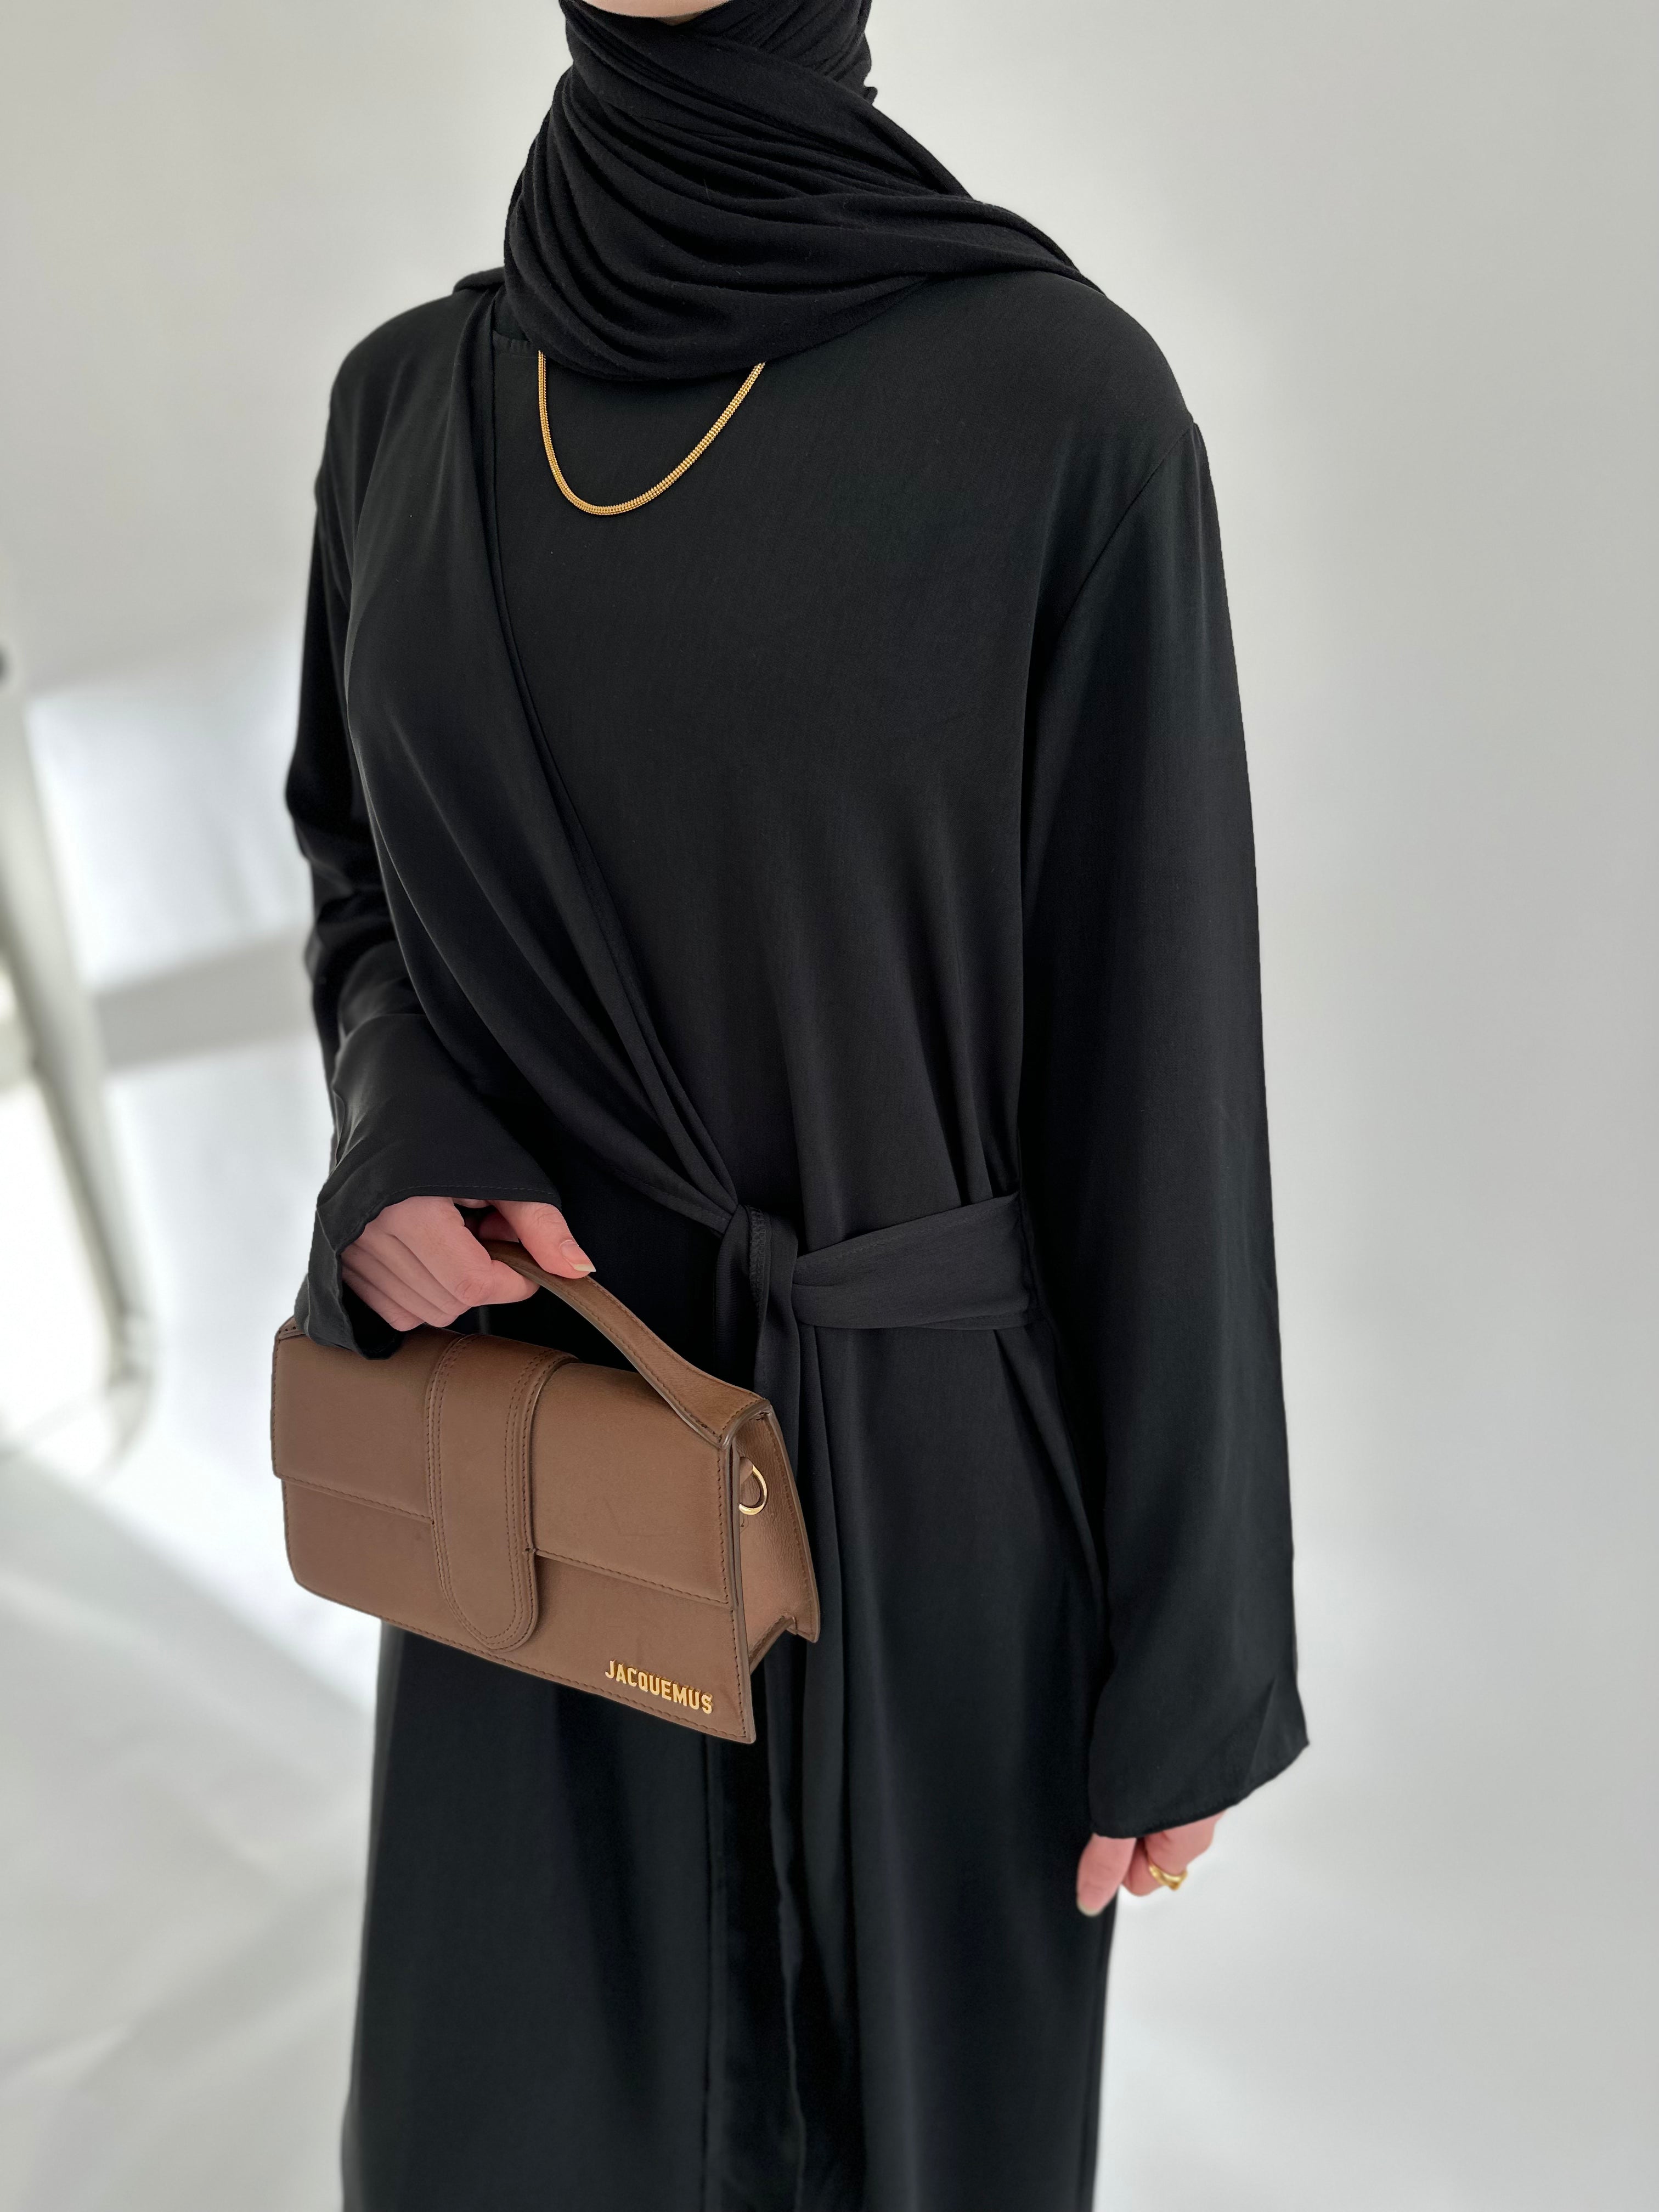 Black: Asymmetrical flowy knot dress